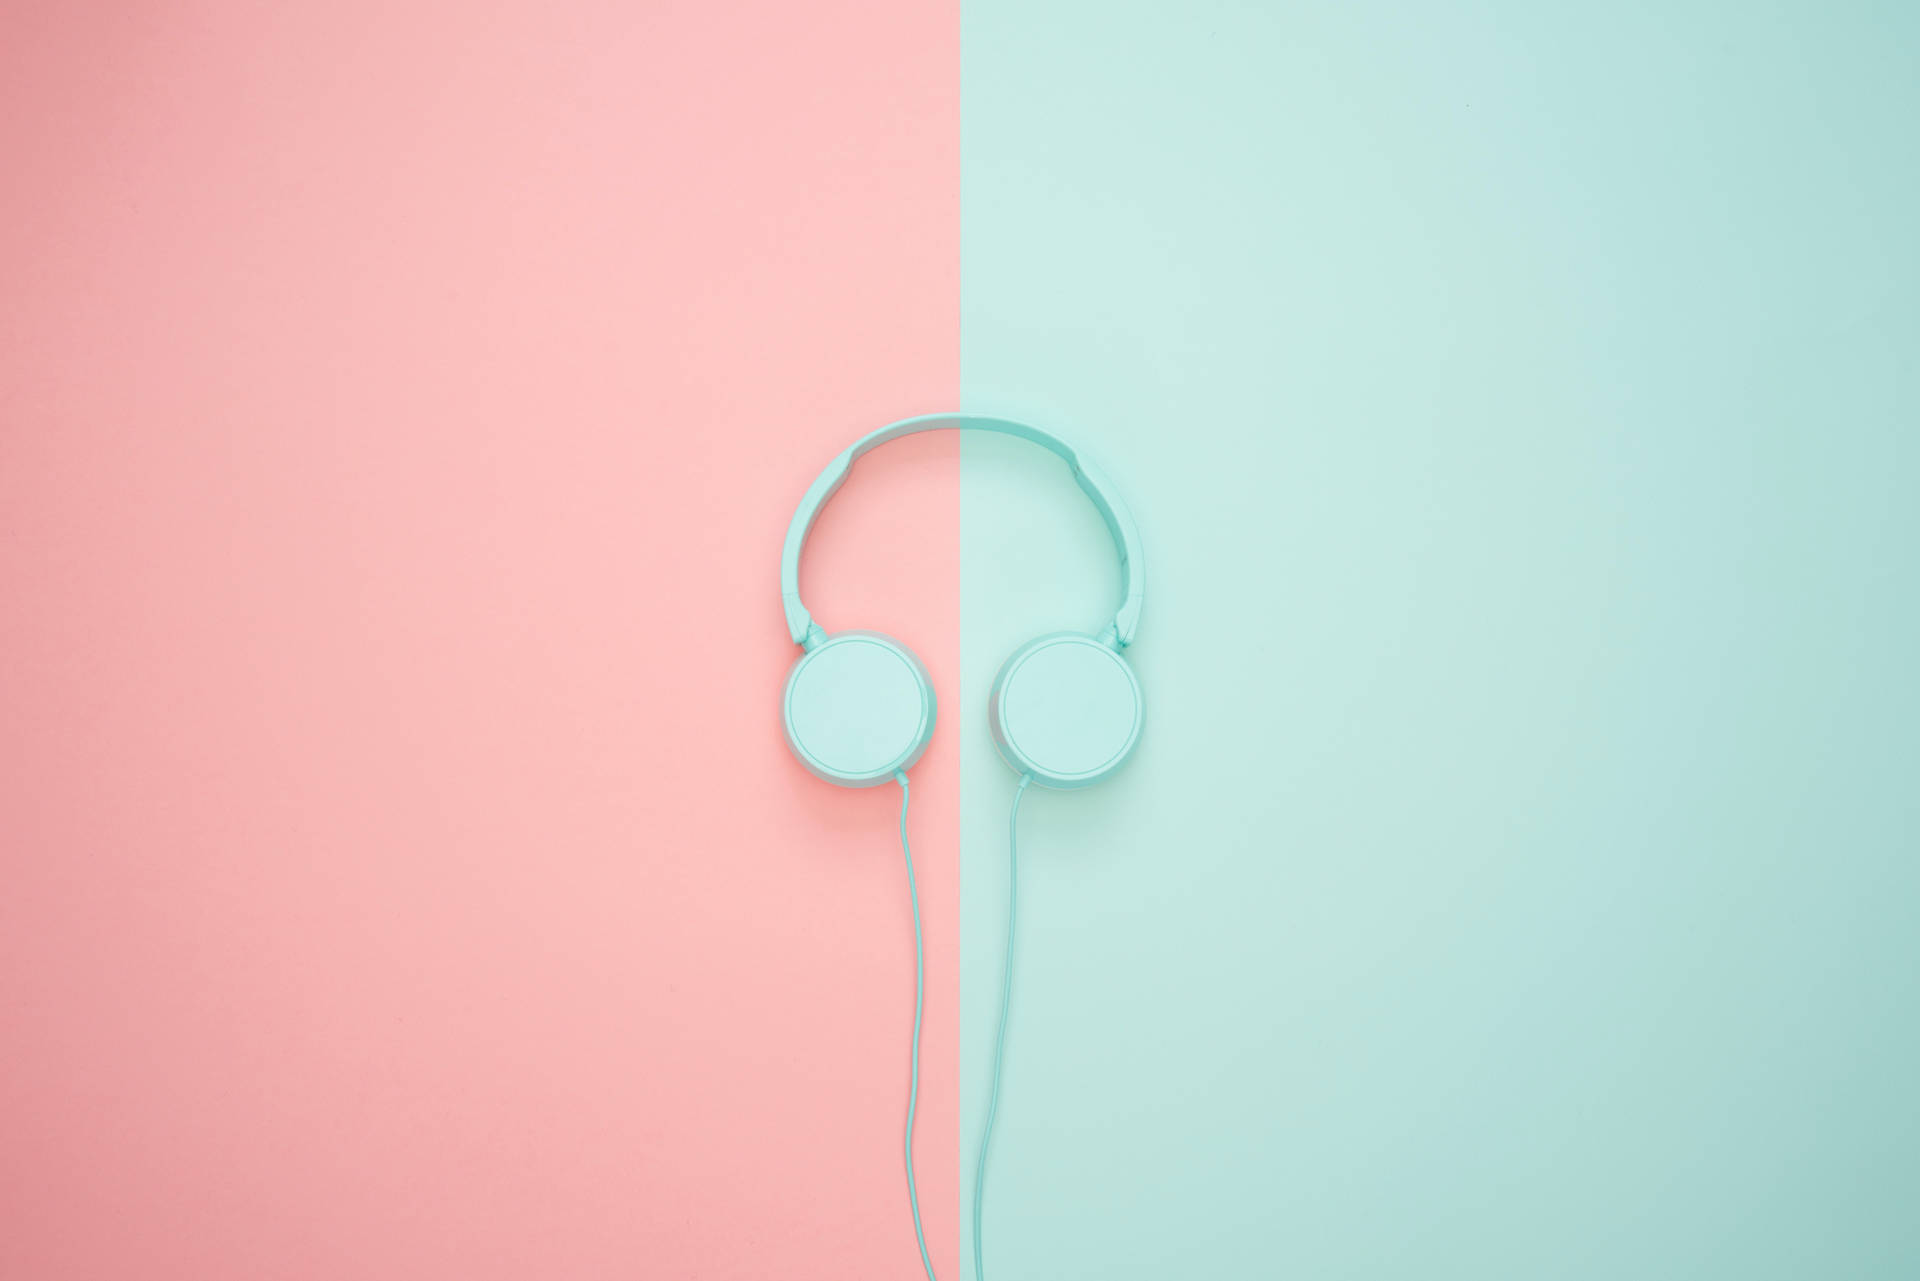 Cute Pastel Aesthetic Blue Headphone